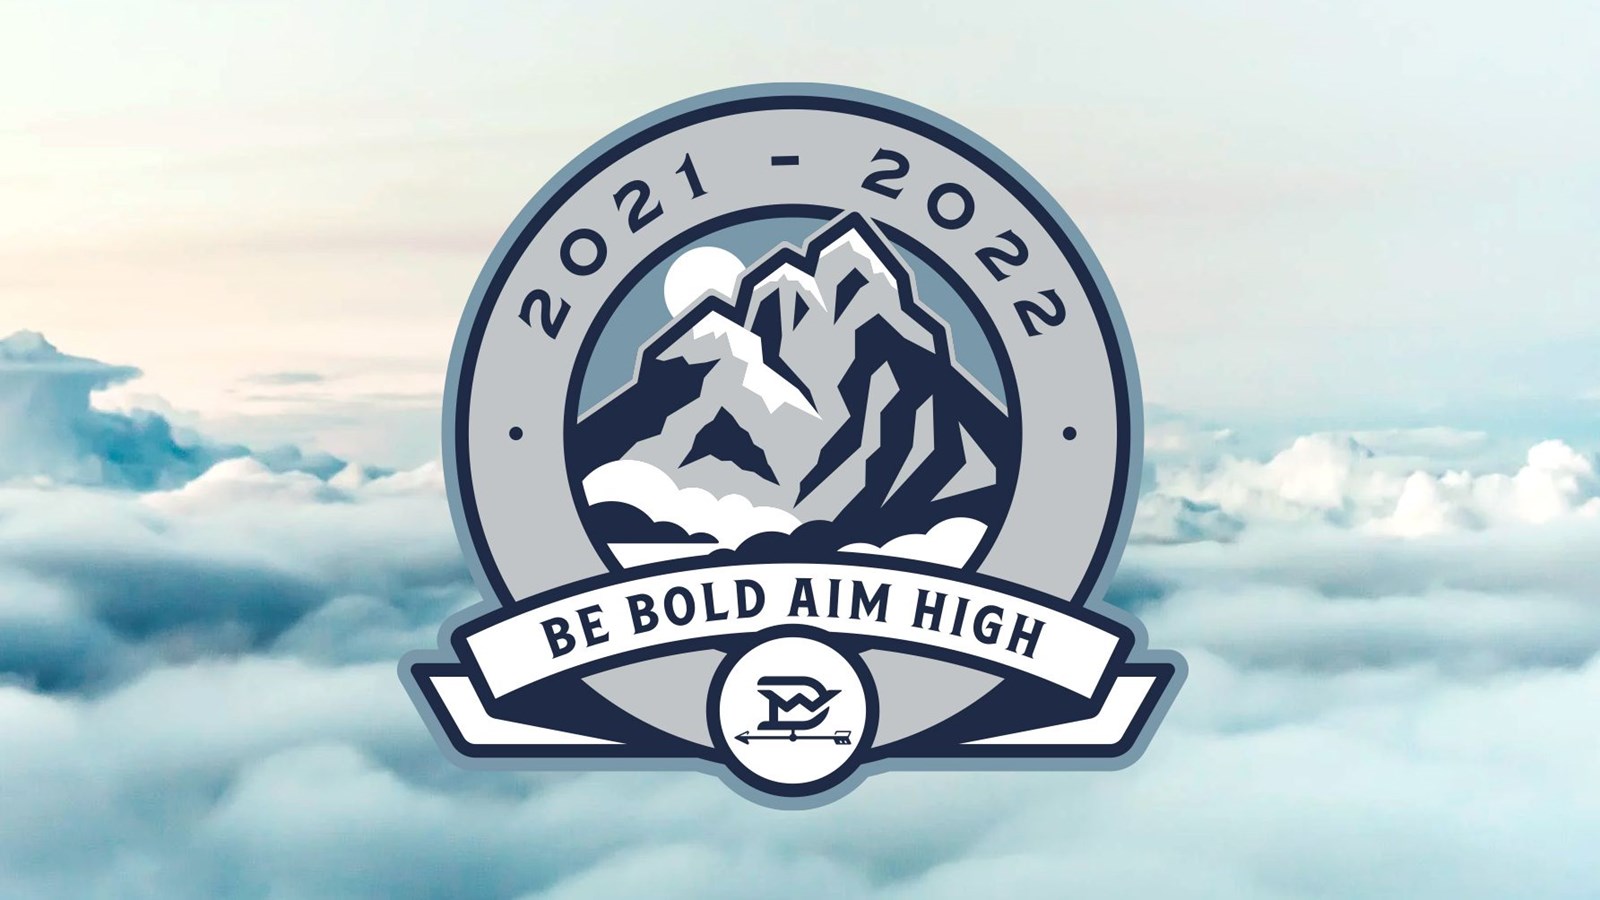 Be Bold Aim High